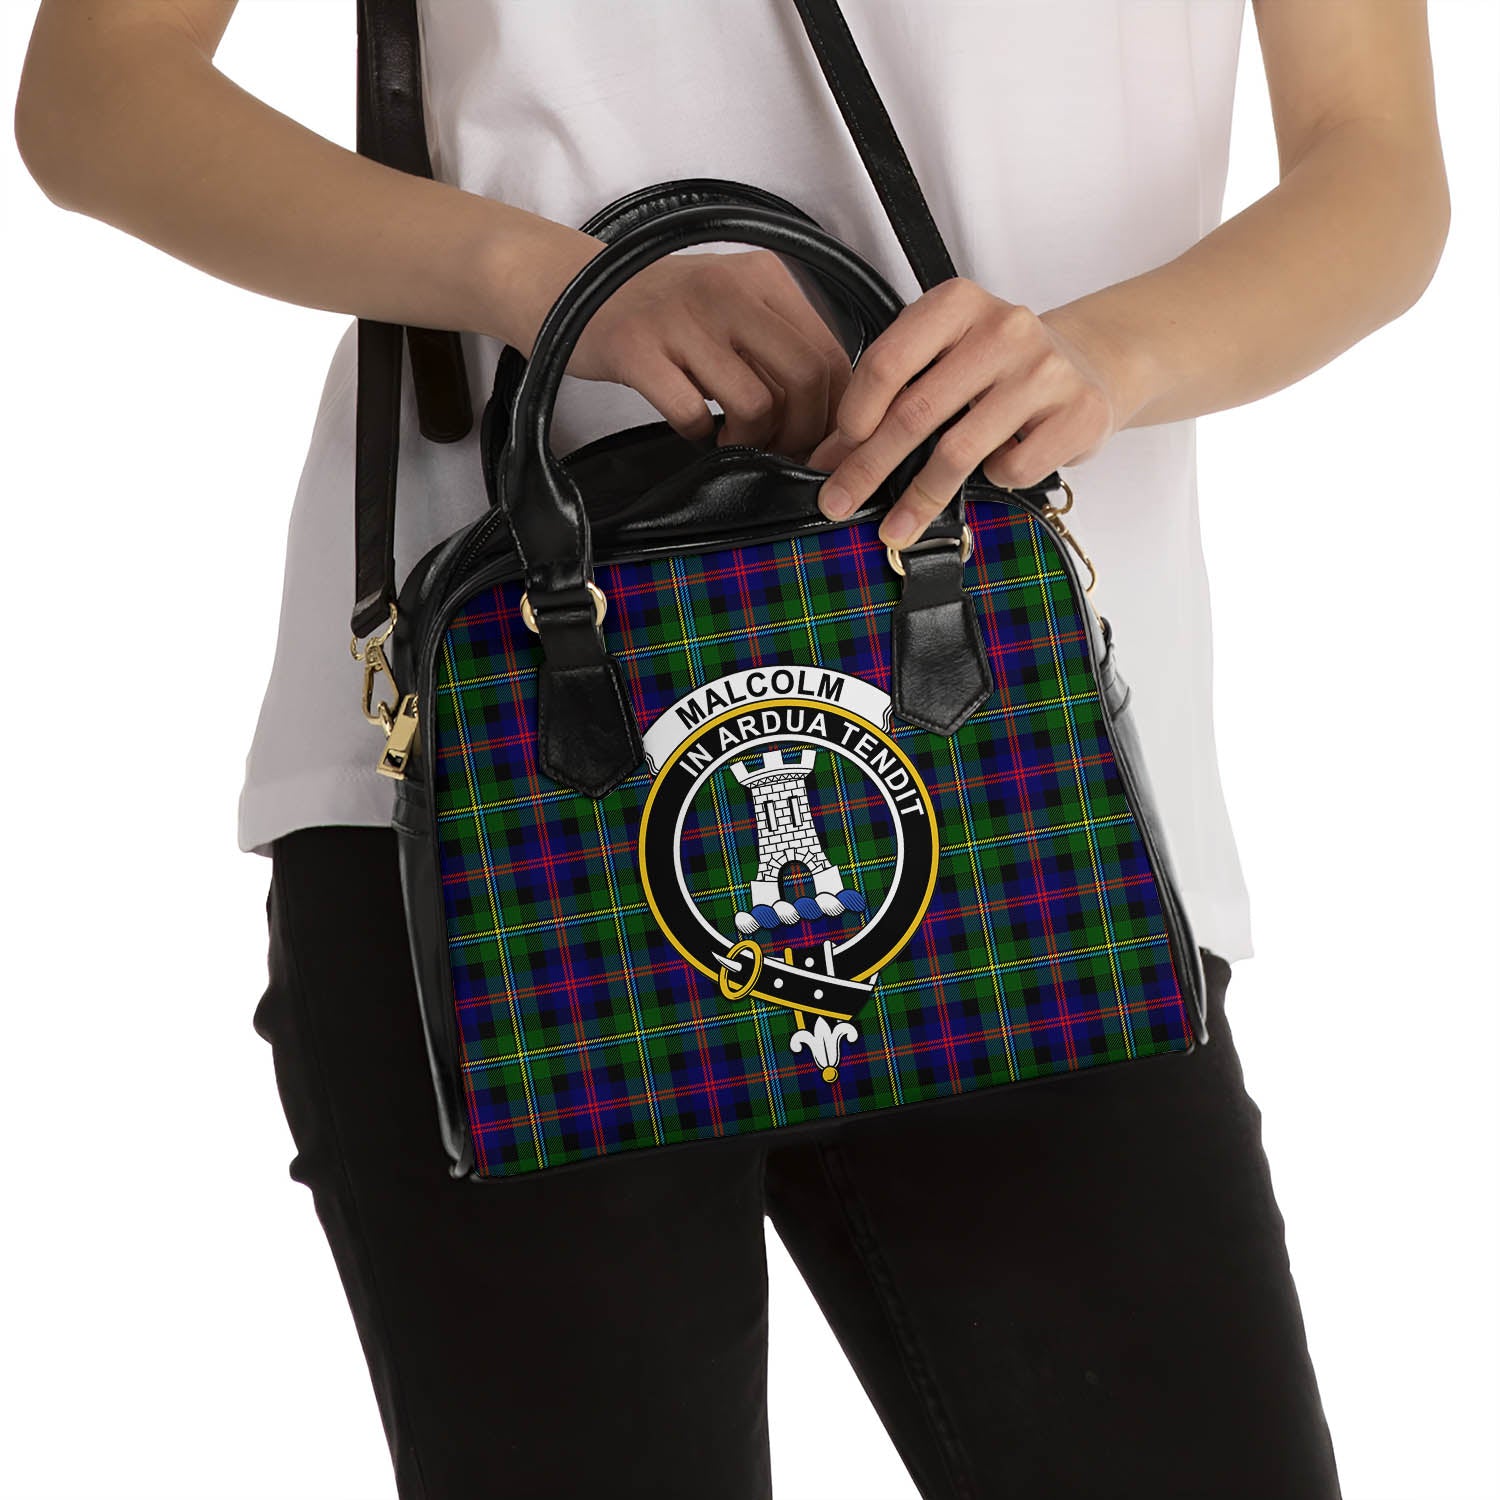 Malcolm Tartan Shoulder Handbags with Family Crest - Tartanvibesclothing